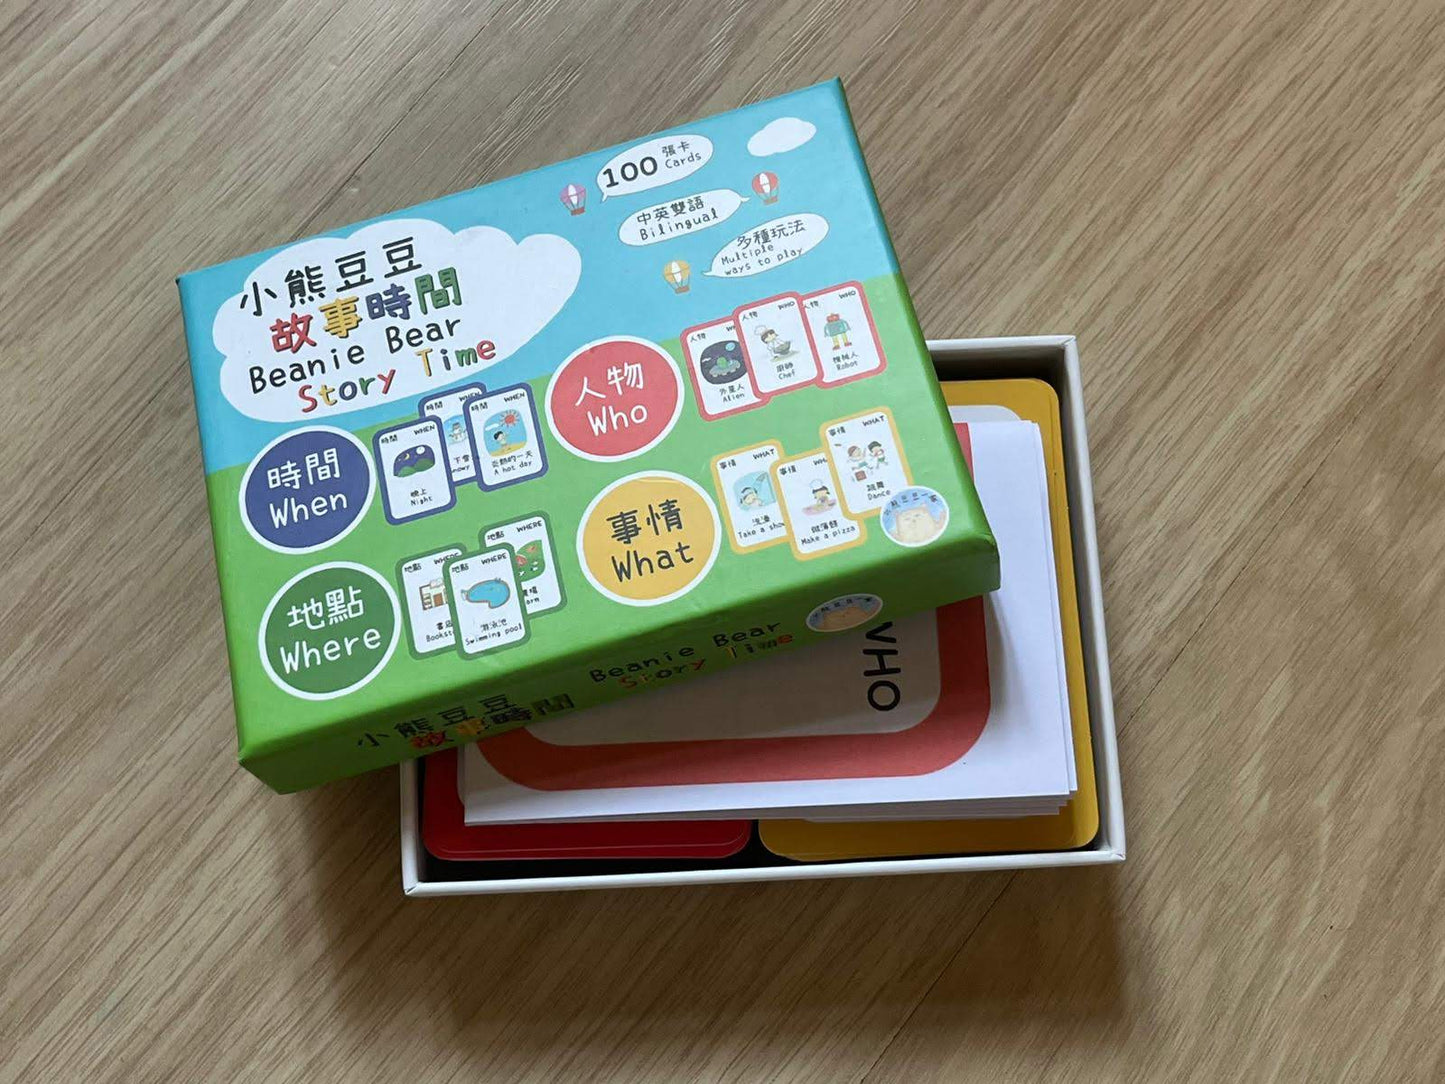 Beanie Bear Story Time Flash Card Game • 小熊豆豆故事時間游戲卡